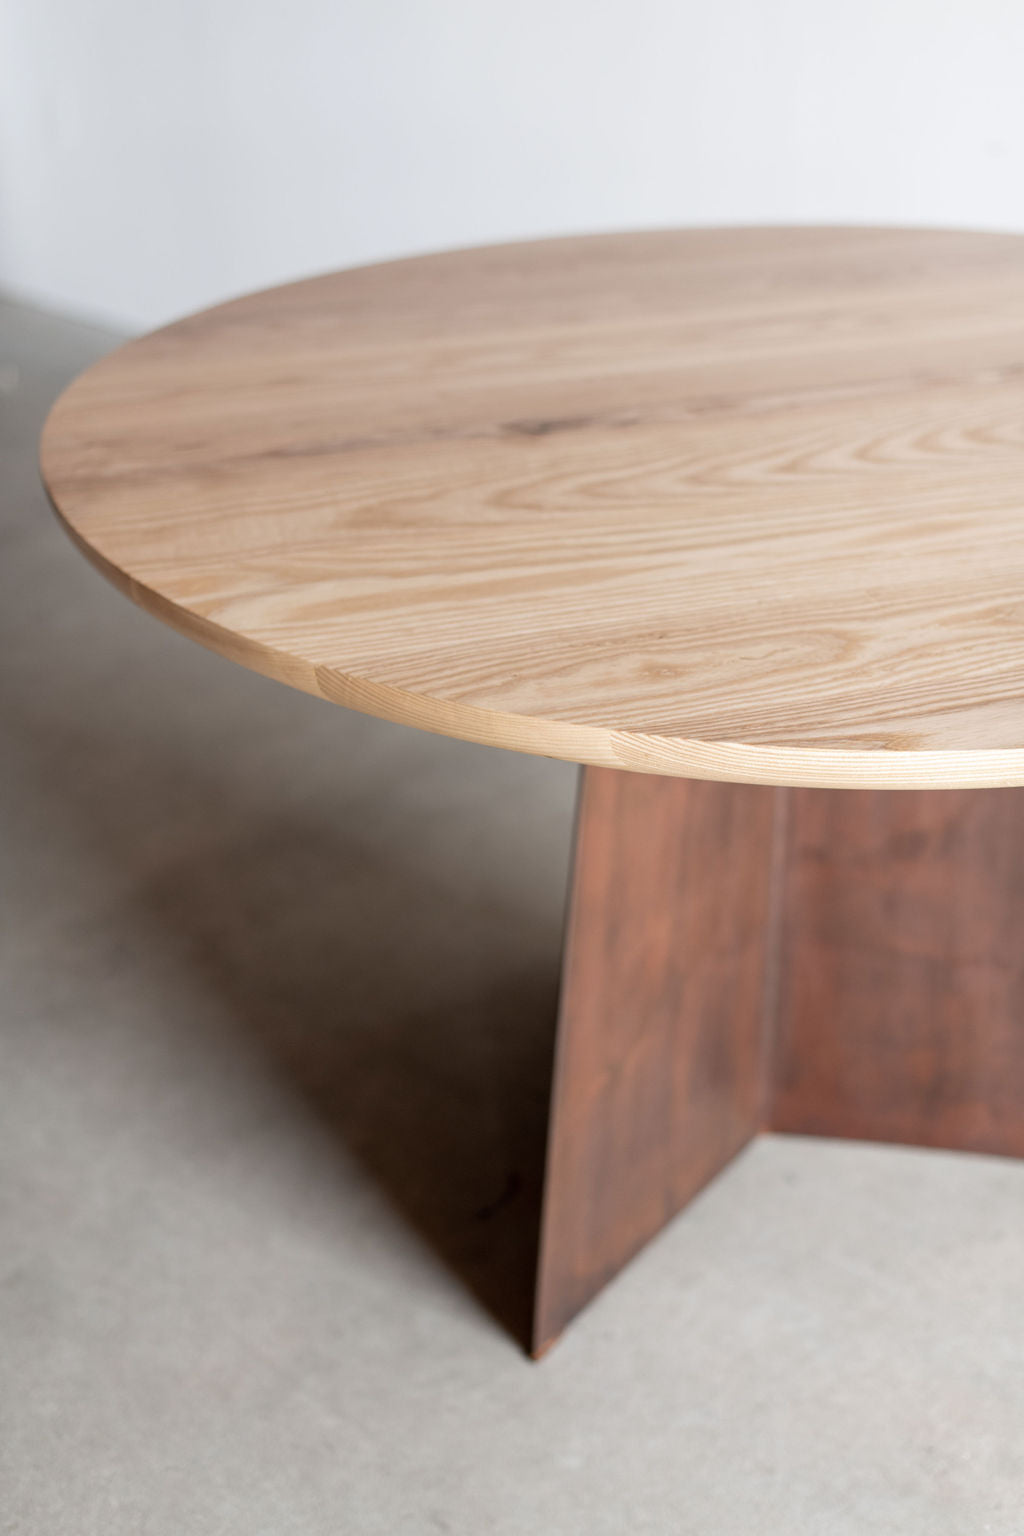 Tula Coffee table- steel legs with Oak wood top